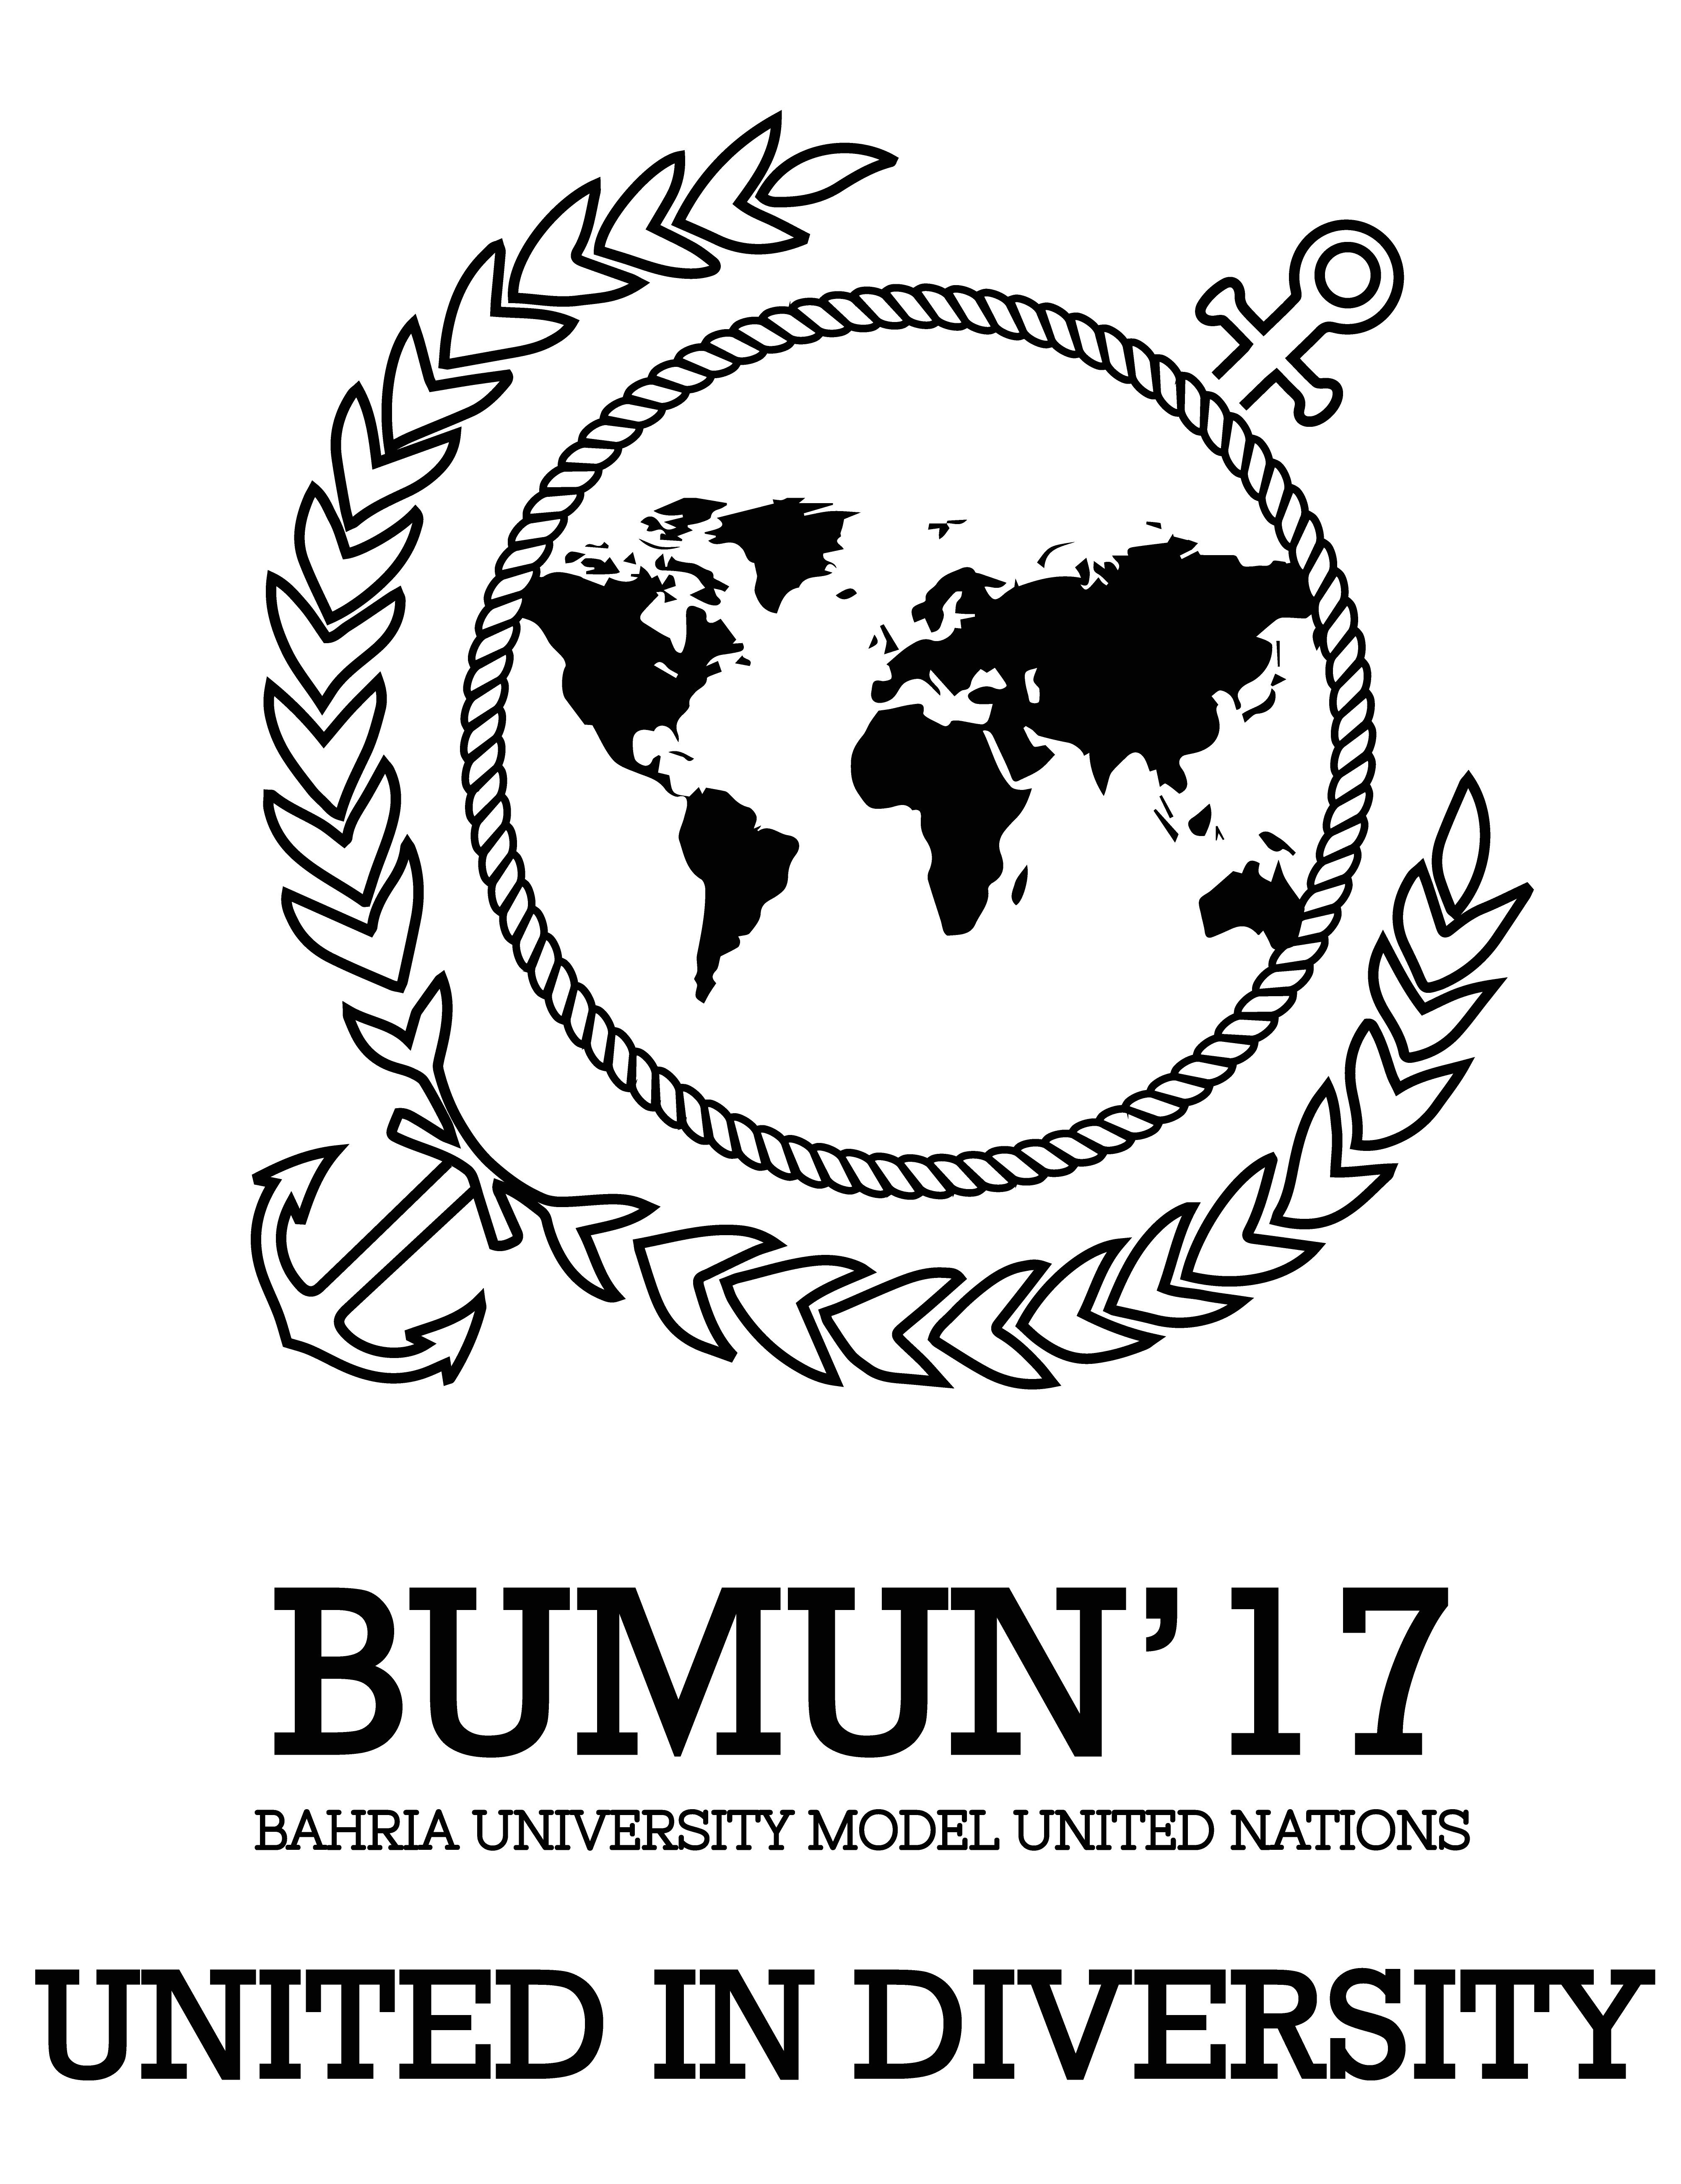 Bahria University Model United Nations